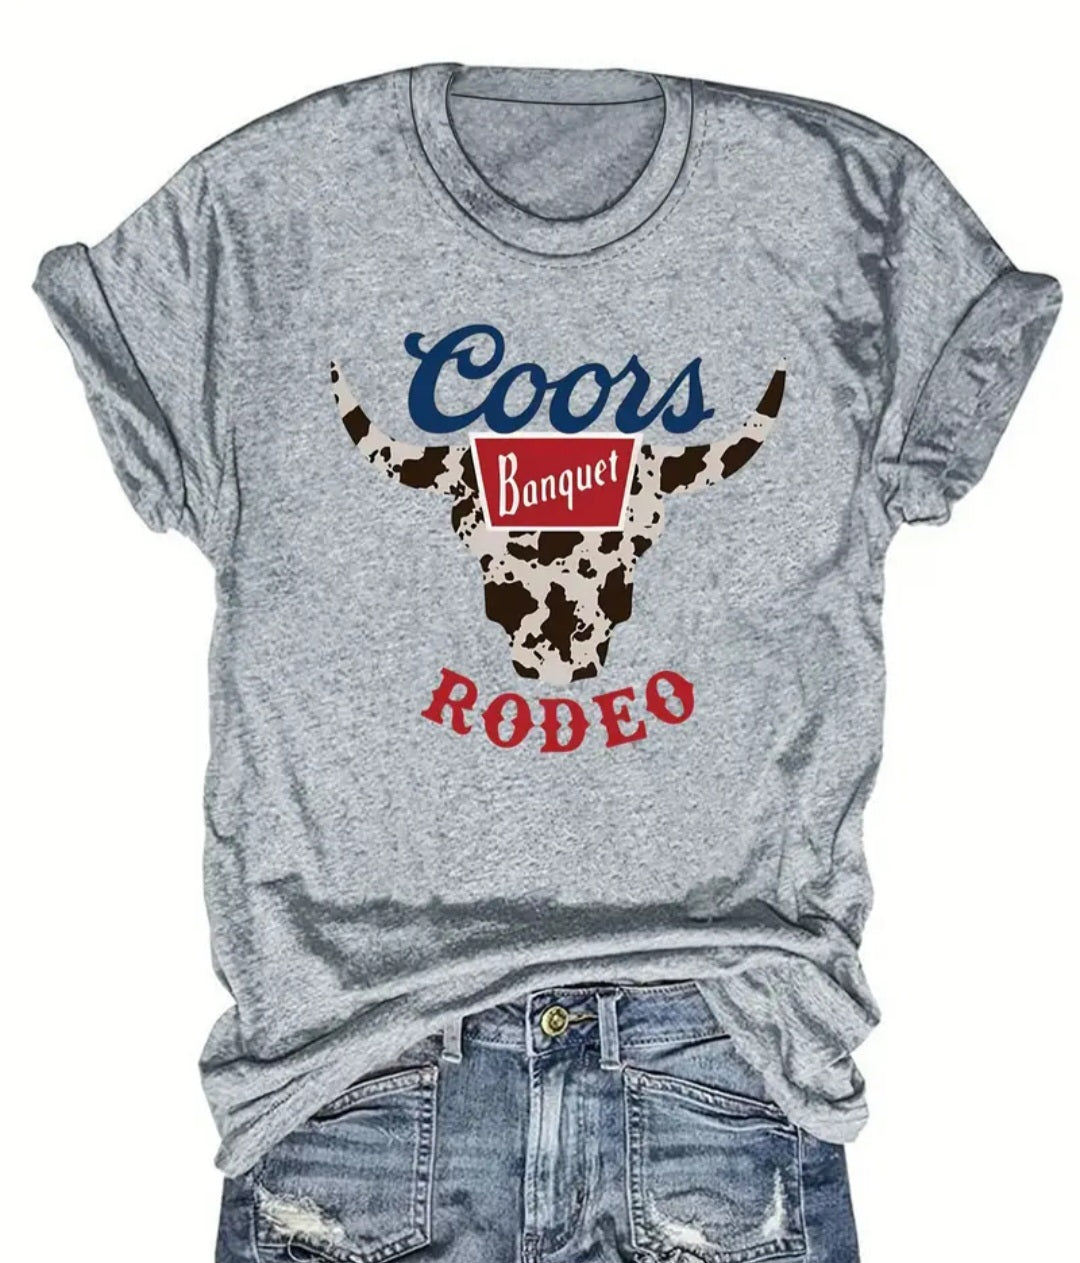 Rodeo Print Women's T-Shirt